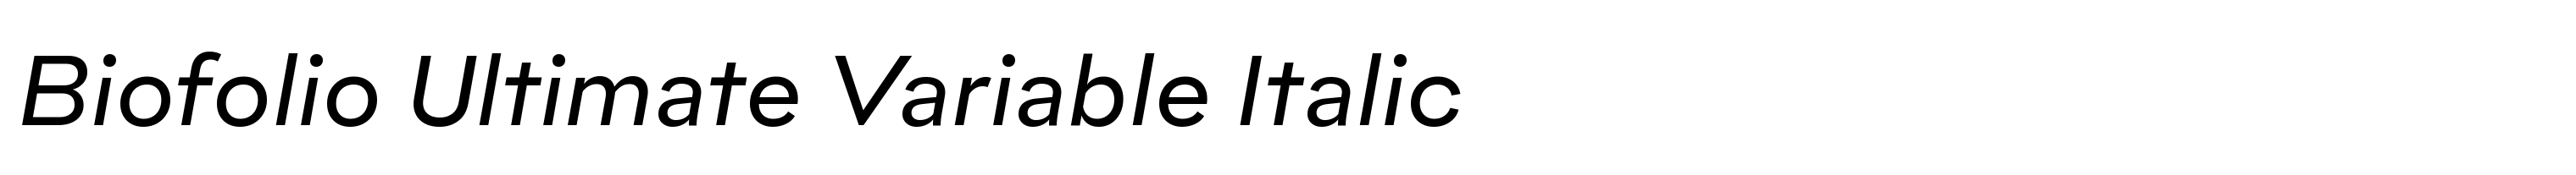 Biofolio Ultimate Variable Italic